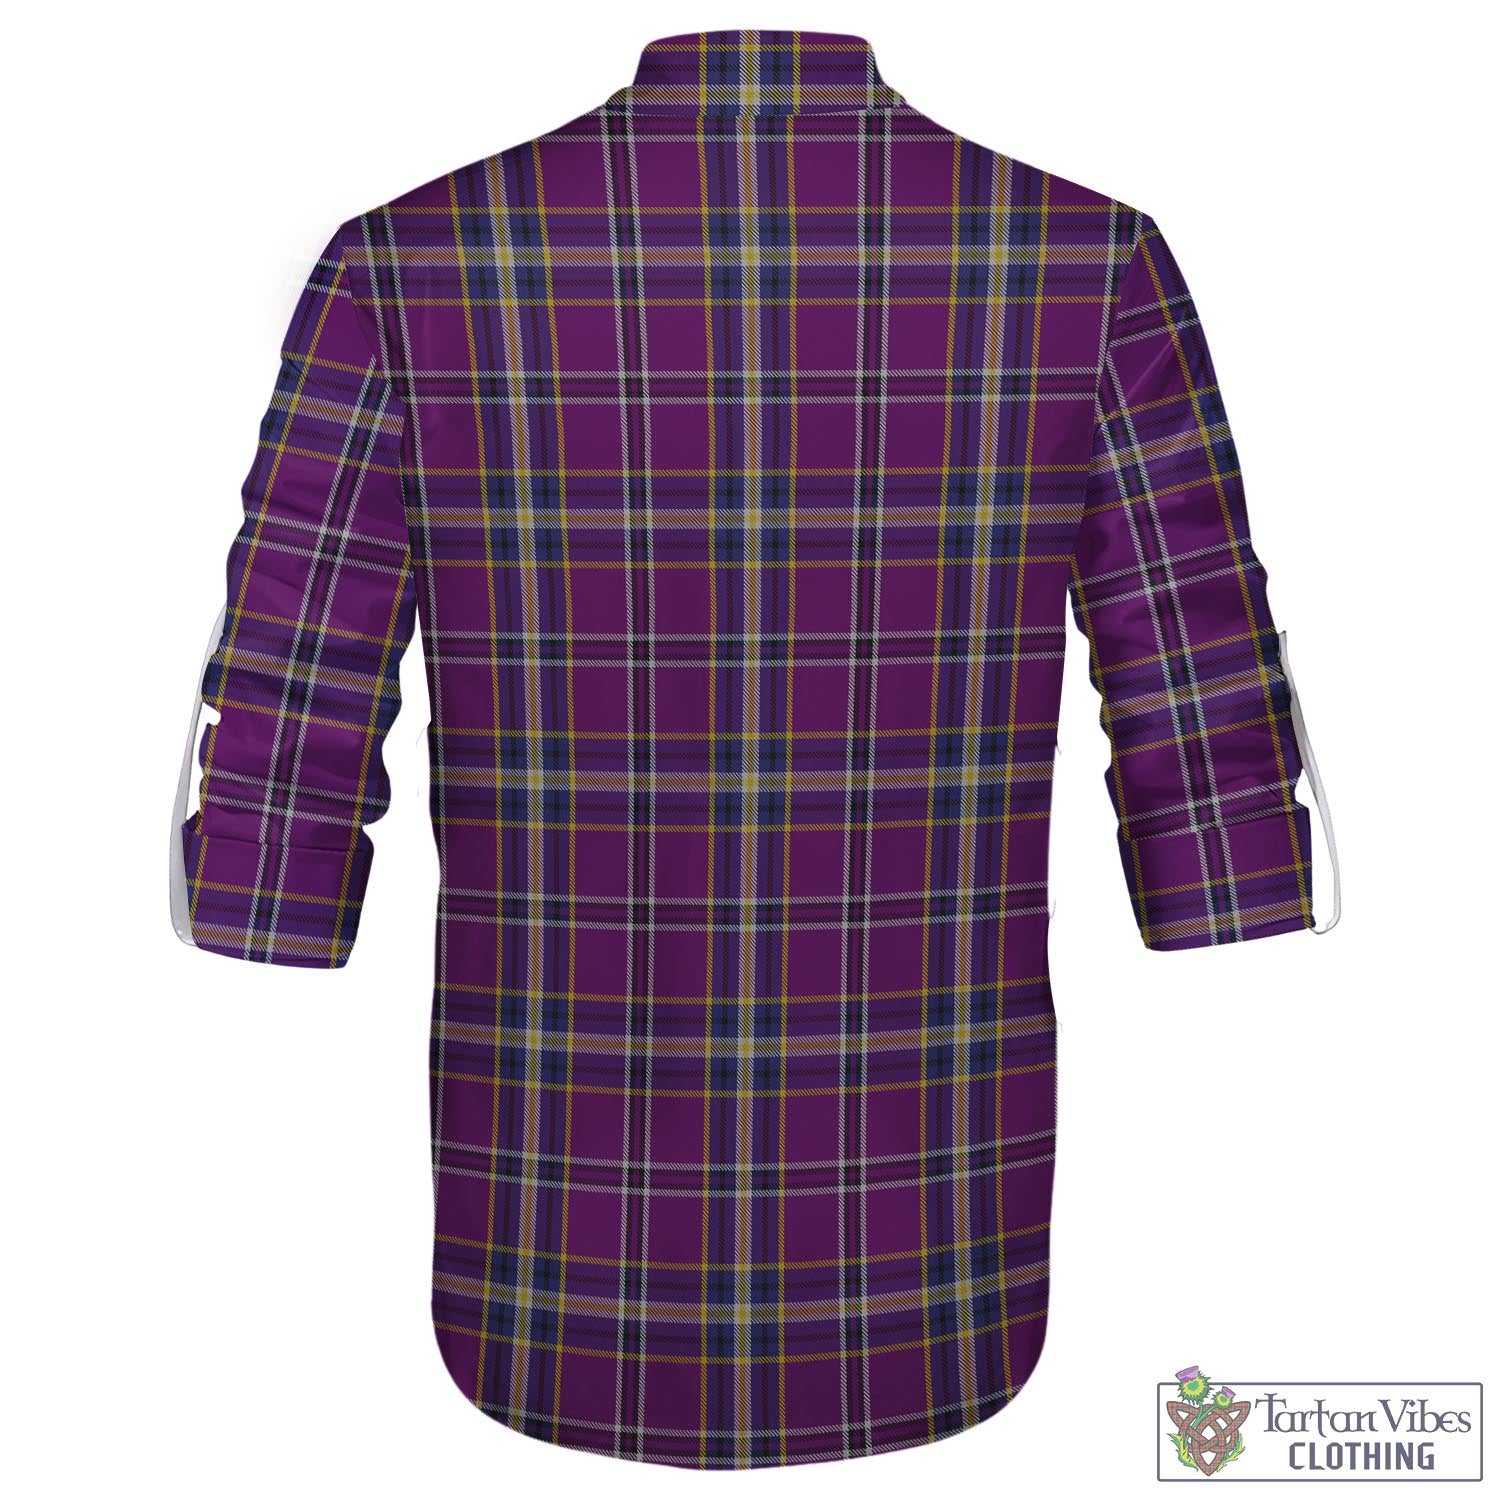 Tartan Vibes Clothing O'Riagain Tartan Men's Scottish Traditional Jacobite Ghillie Kilt Shirt